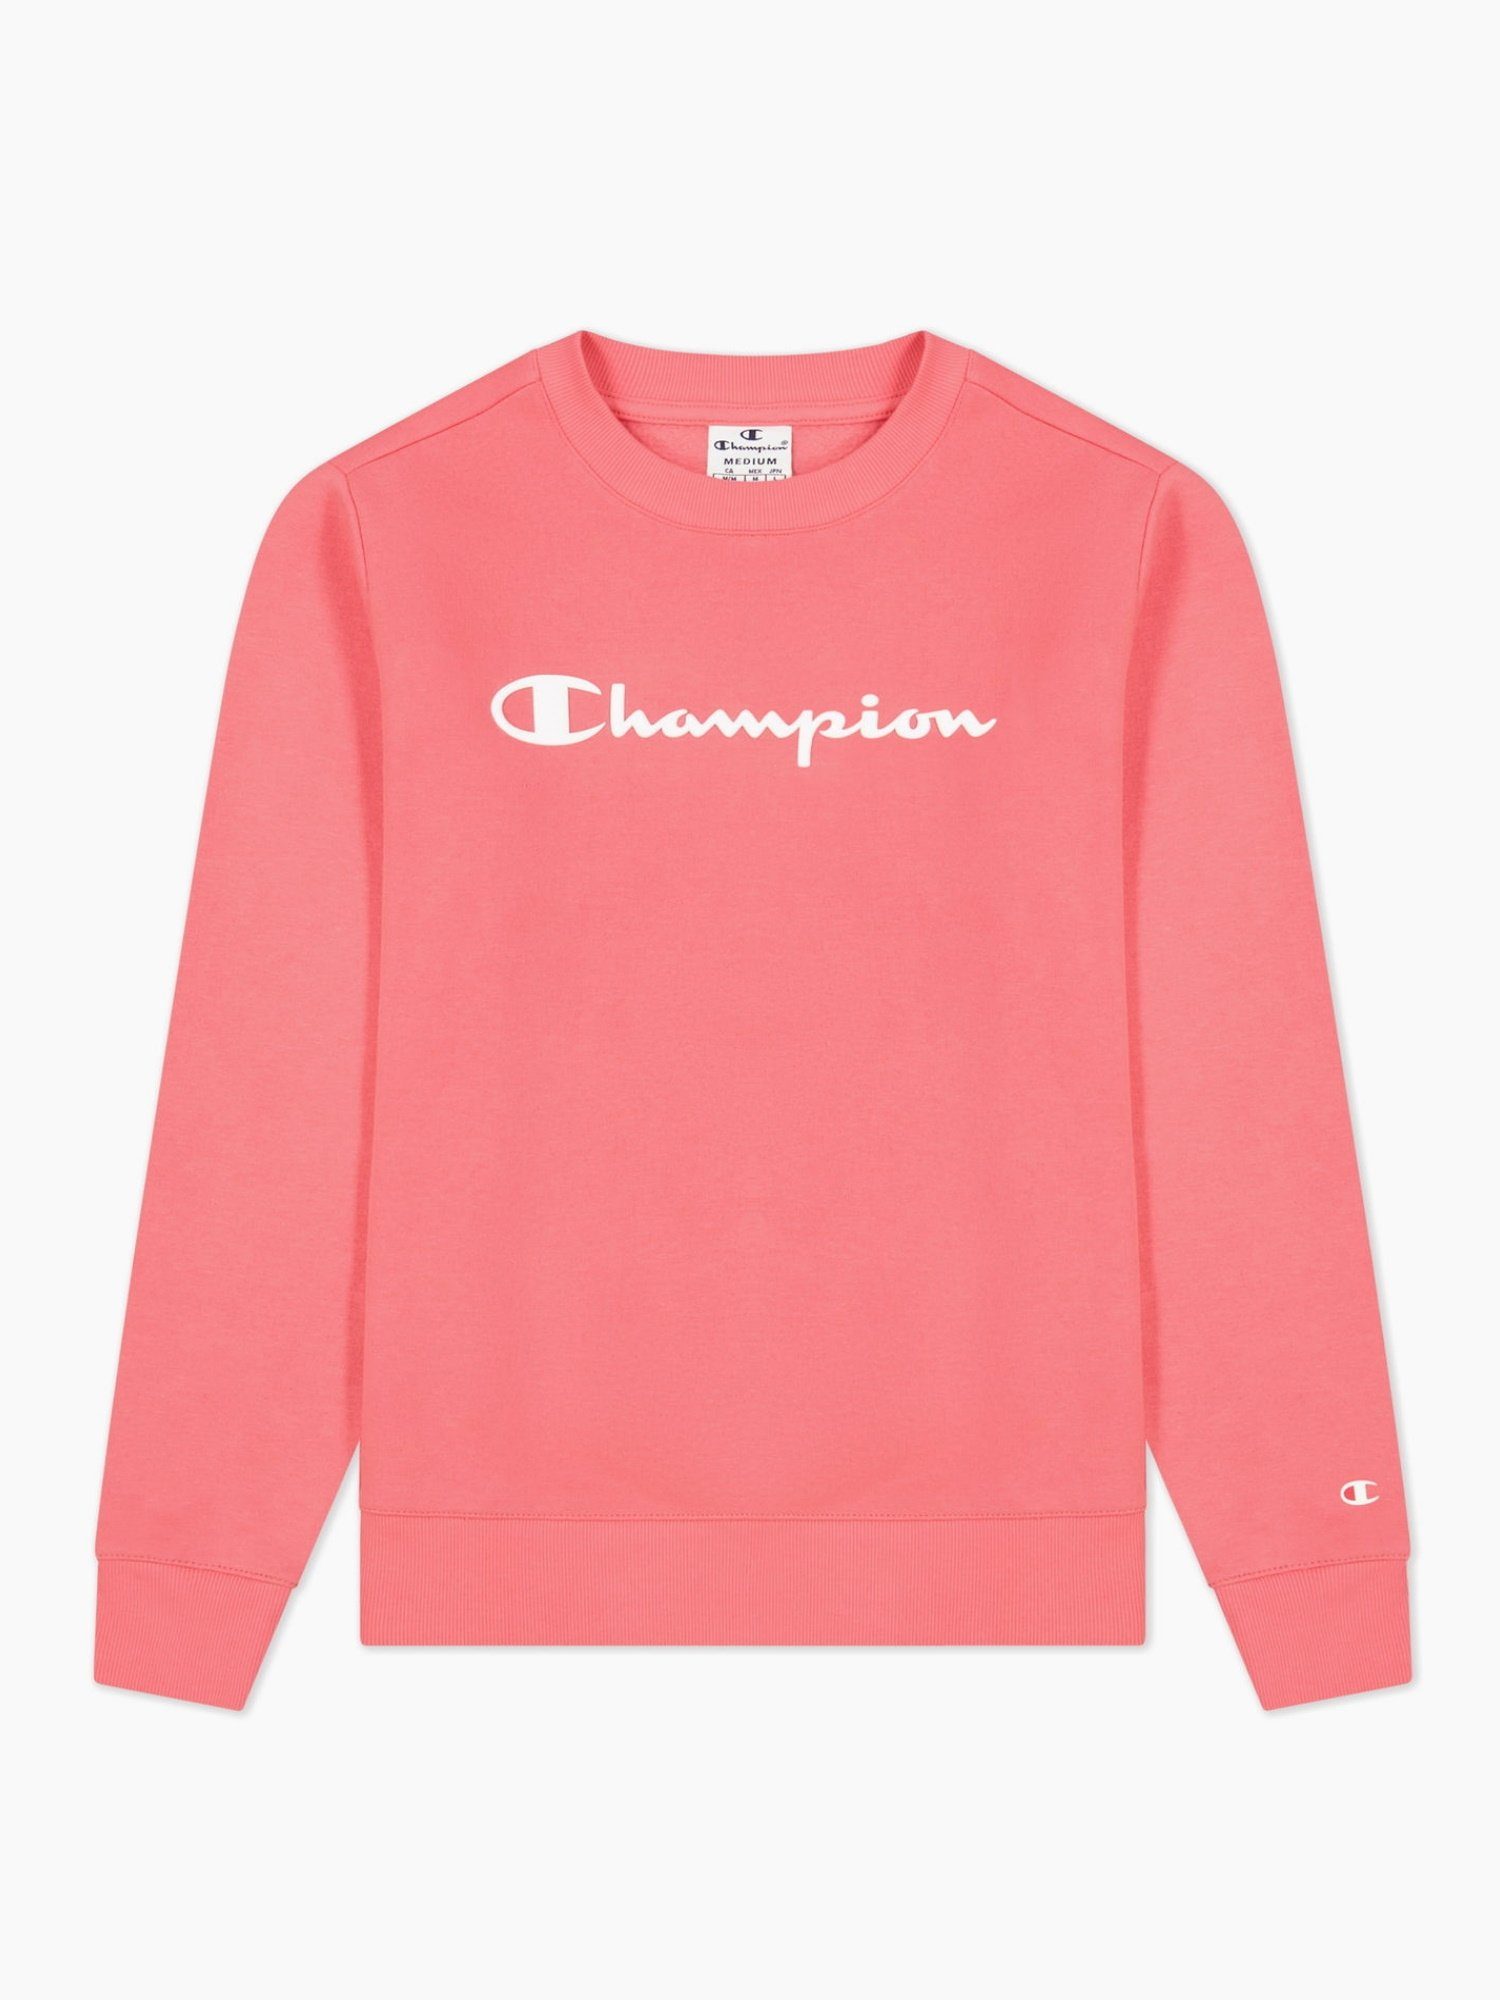 Champion Sweatshirt Pullover rosa aus Baumwollfleece mit Sweatshirt